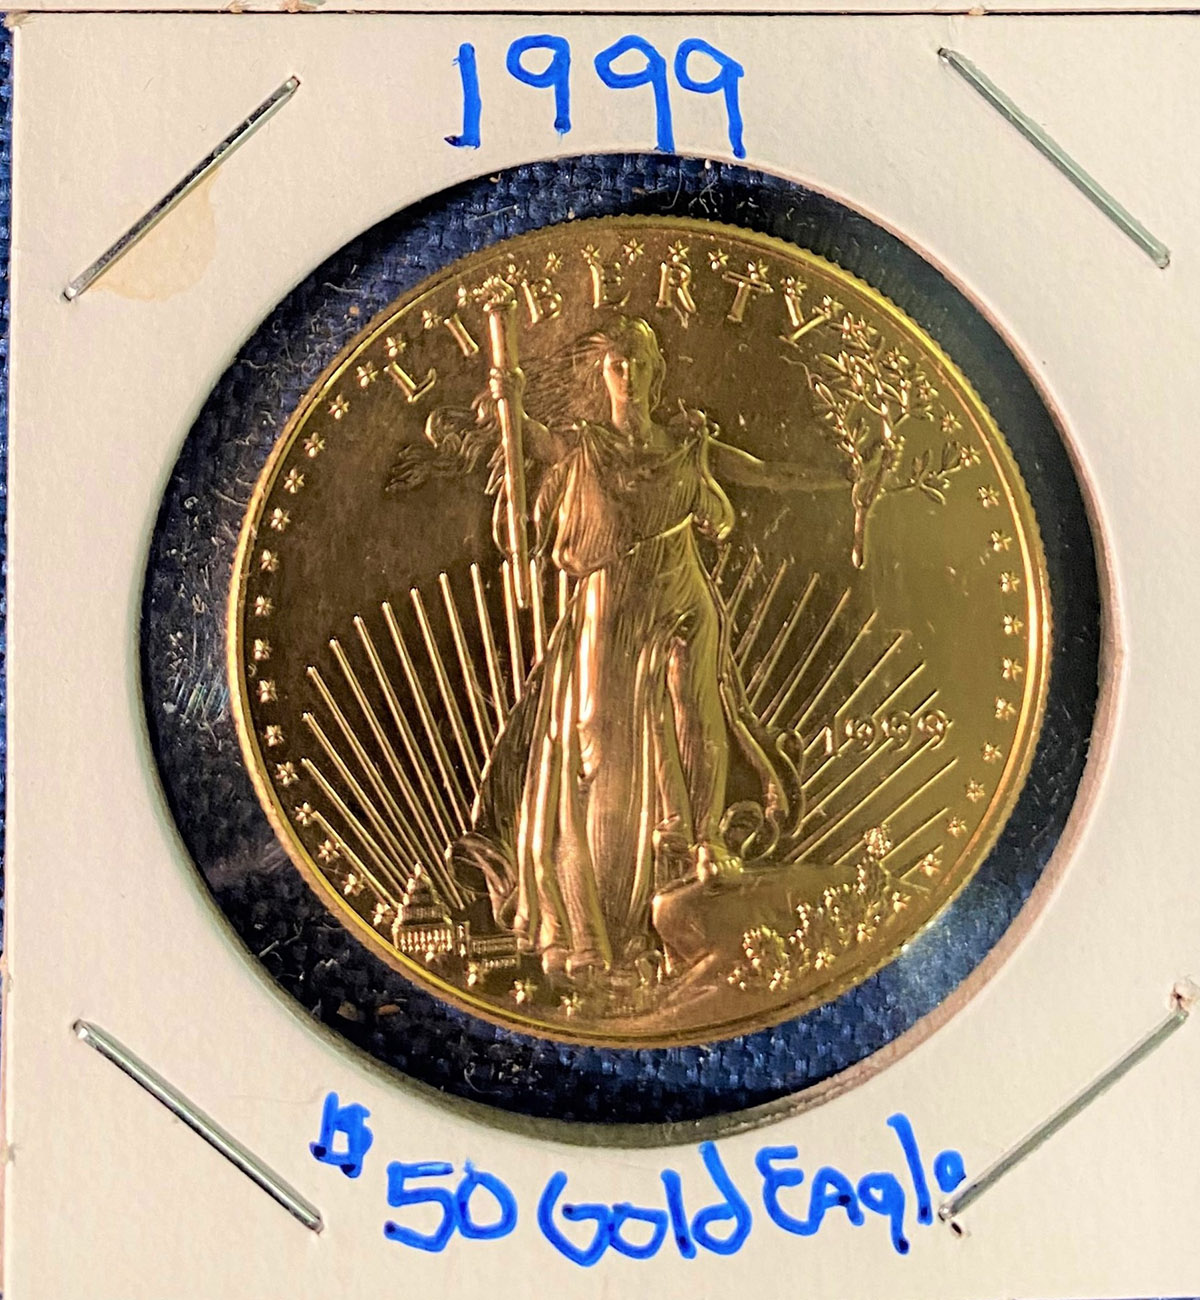 1999 $50 Gold Coin $2,415